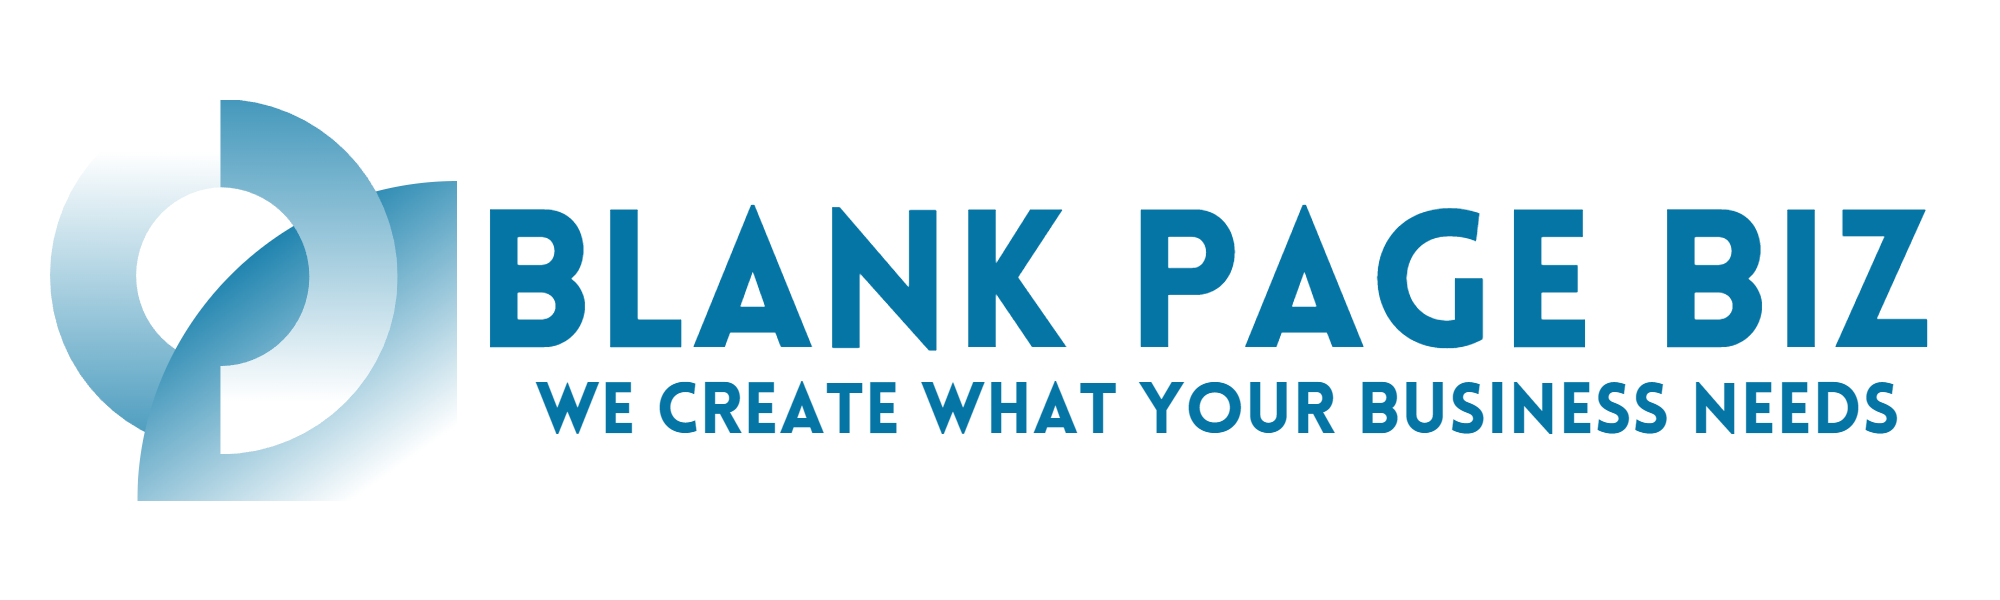 Blank Page - Web Service Portal